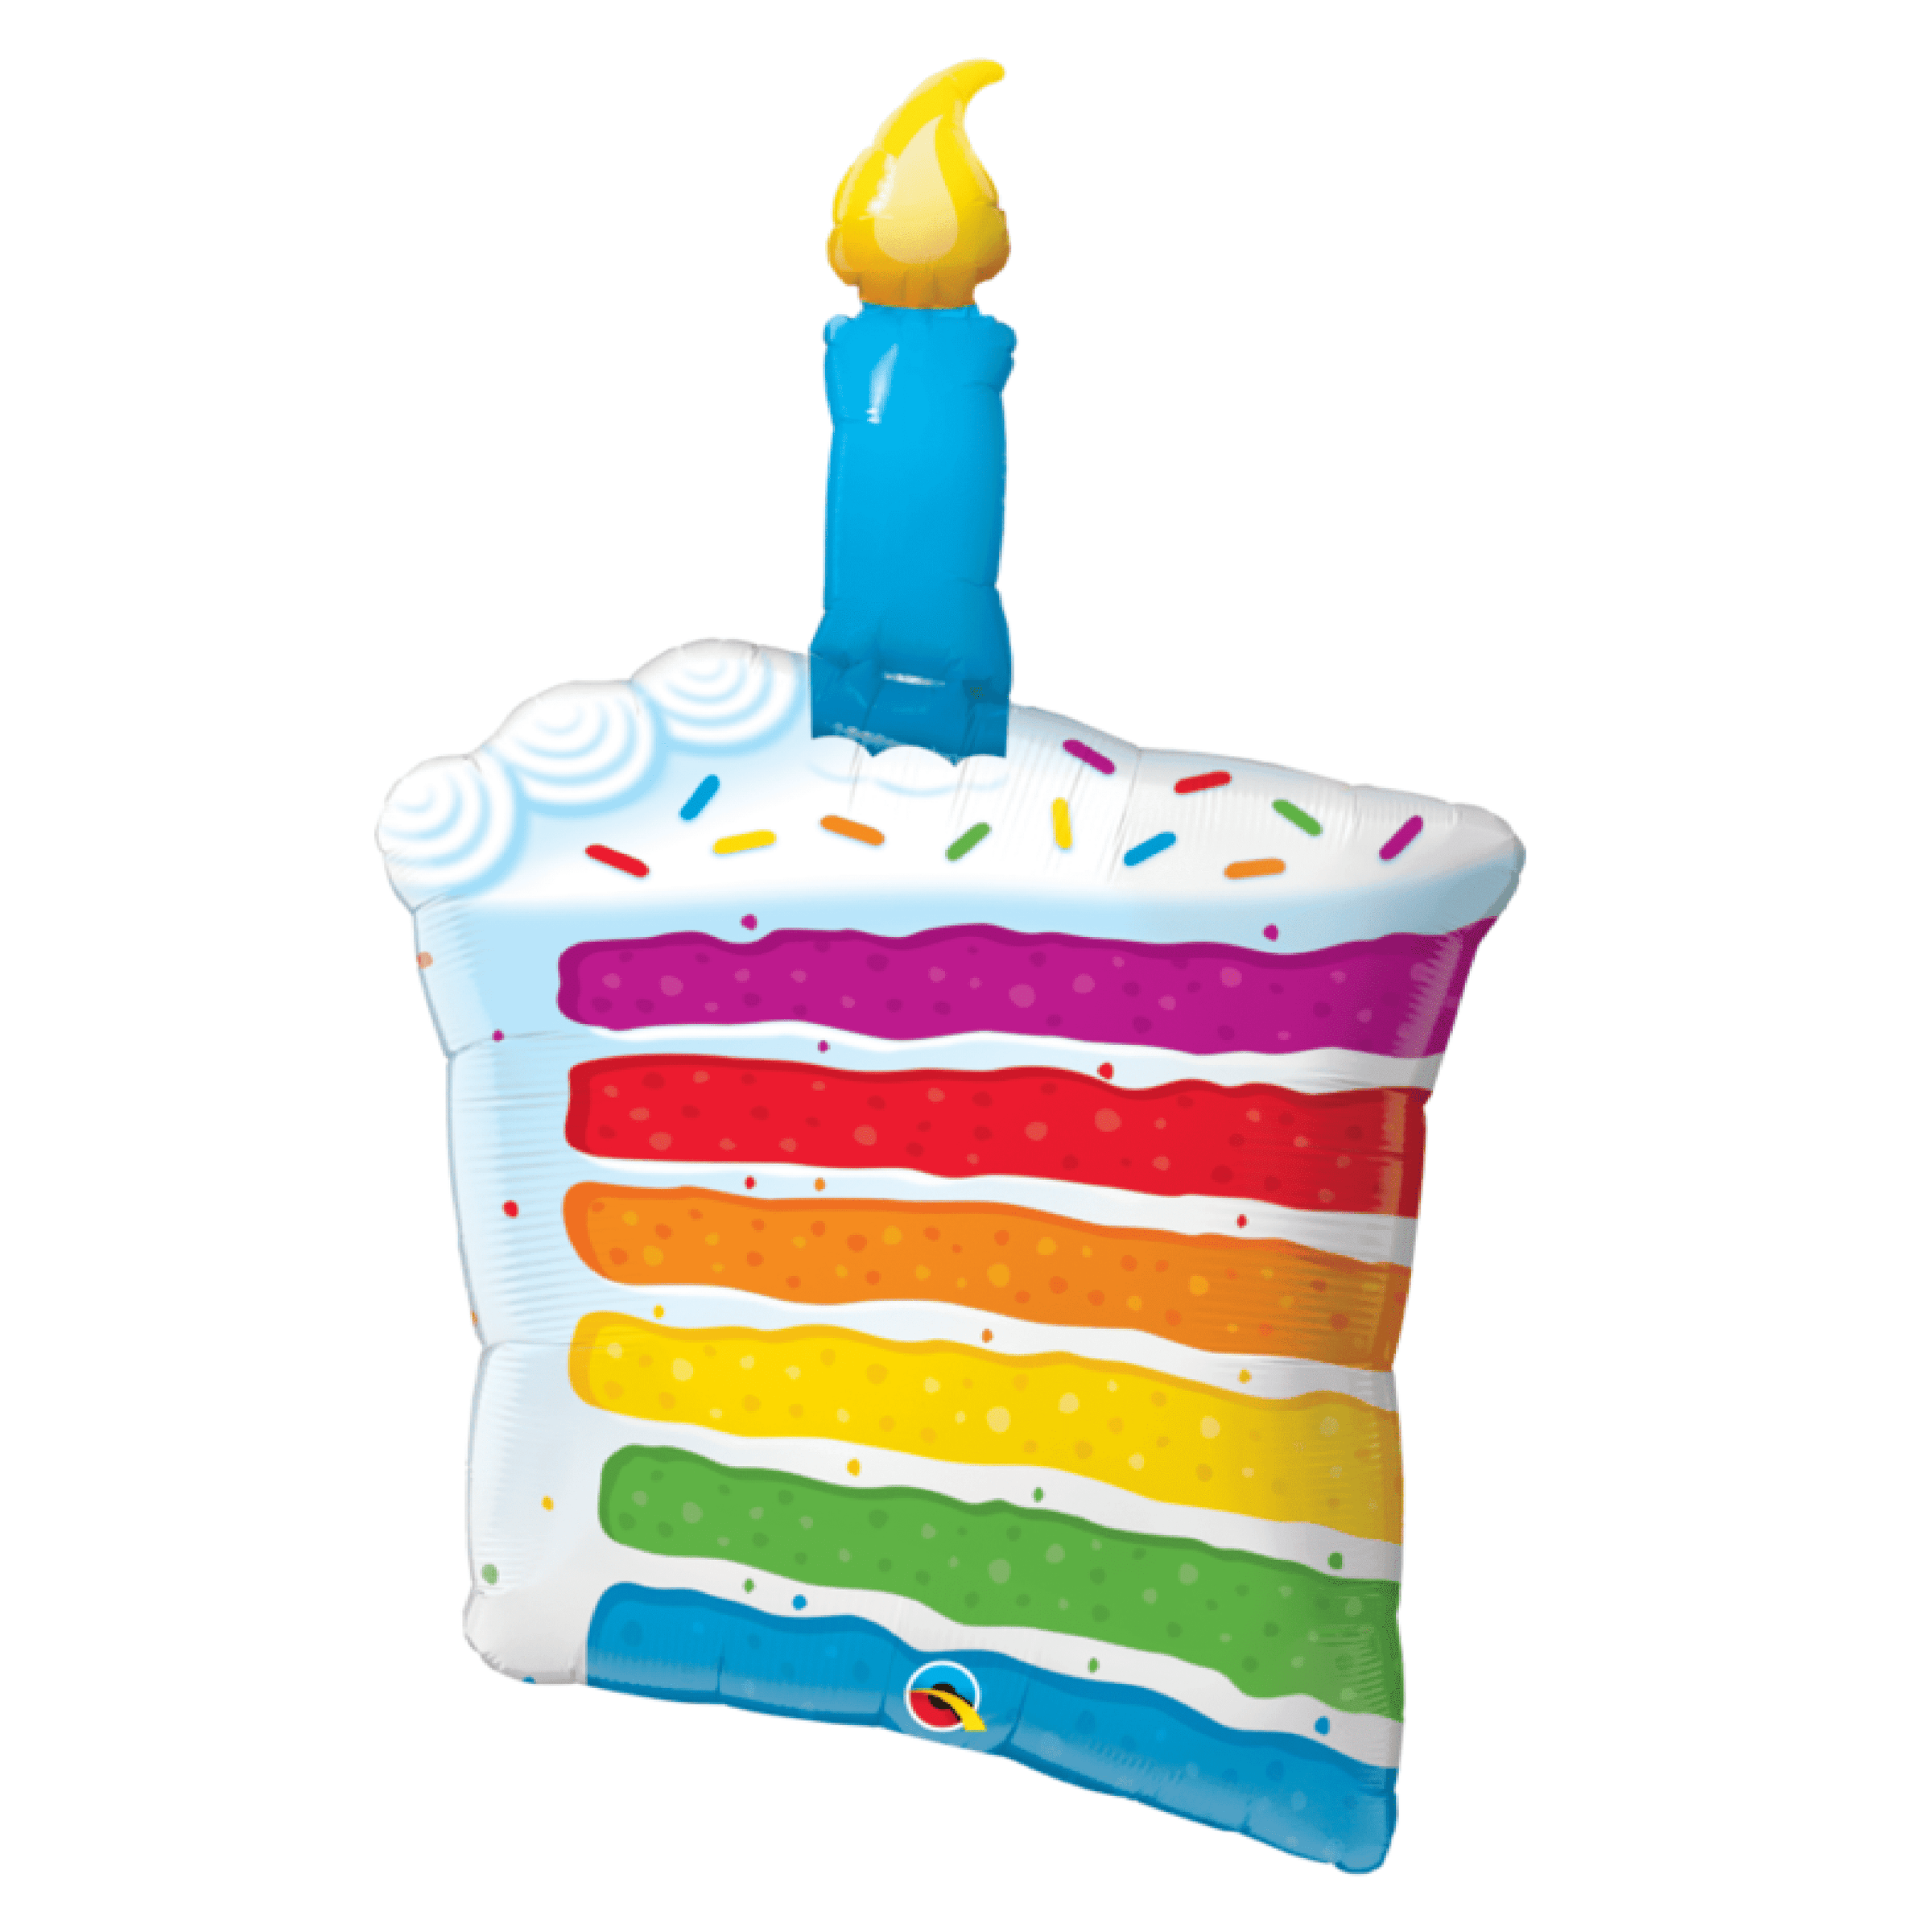 Vela de cumpleaños de color, vela, cumpleaños png